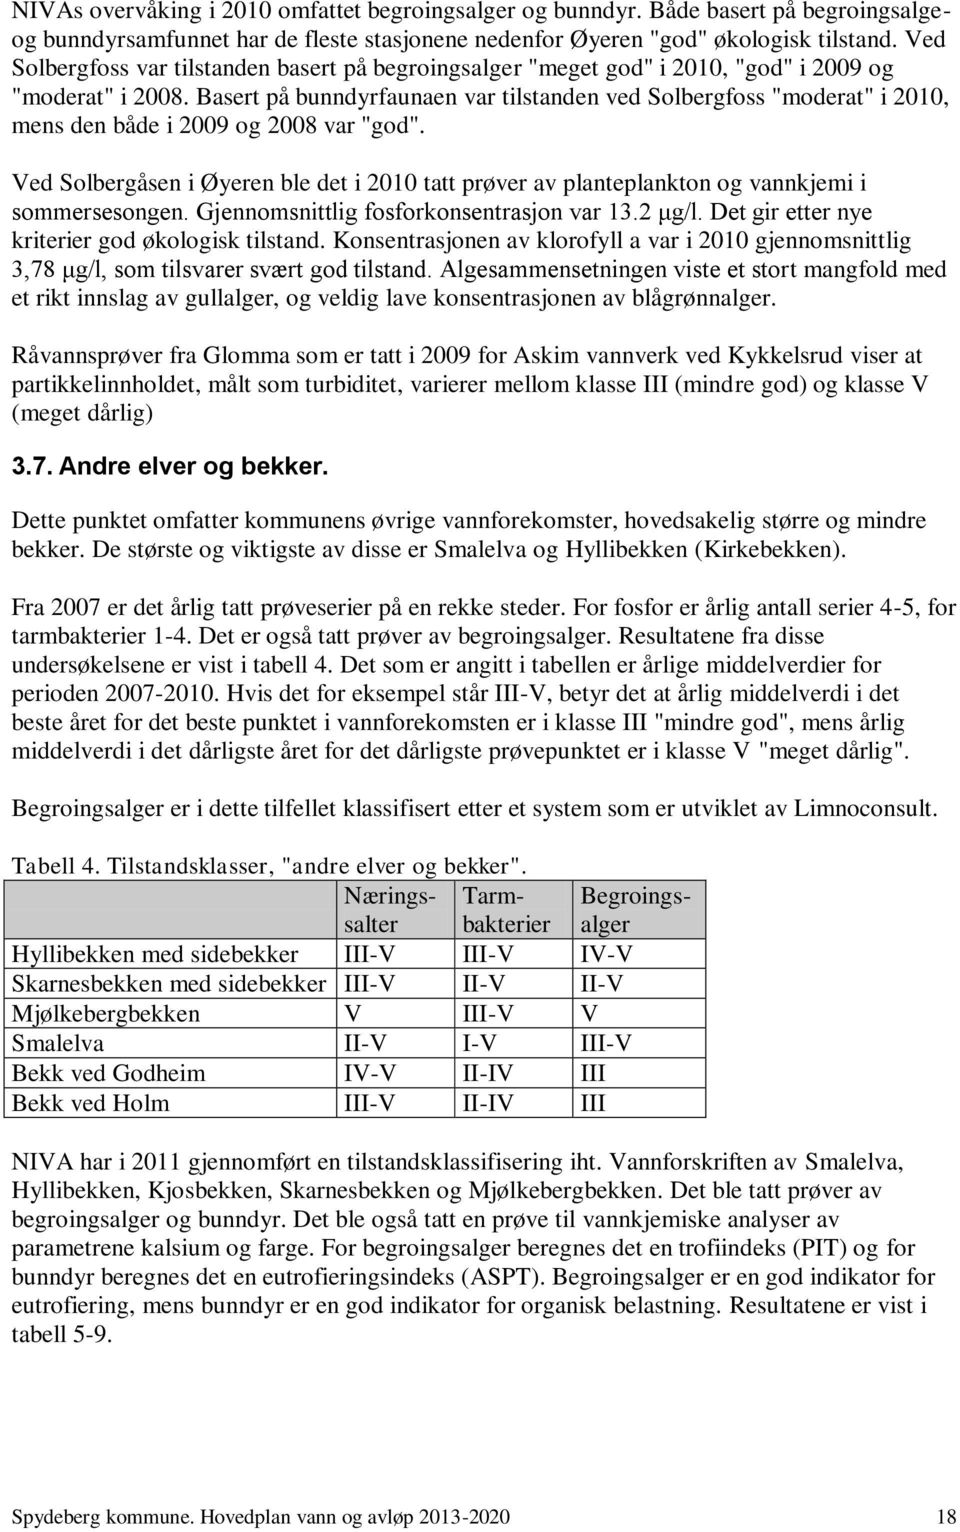 Basert på bunndyrfaunaen var tilstanden ved Solbergfoss "moderat" i 2010, mens den både i 2009 og 2008 var "god".